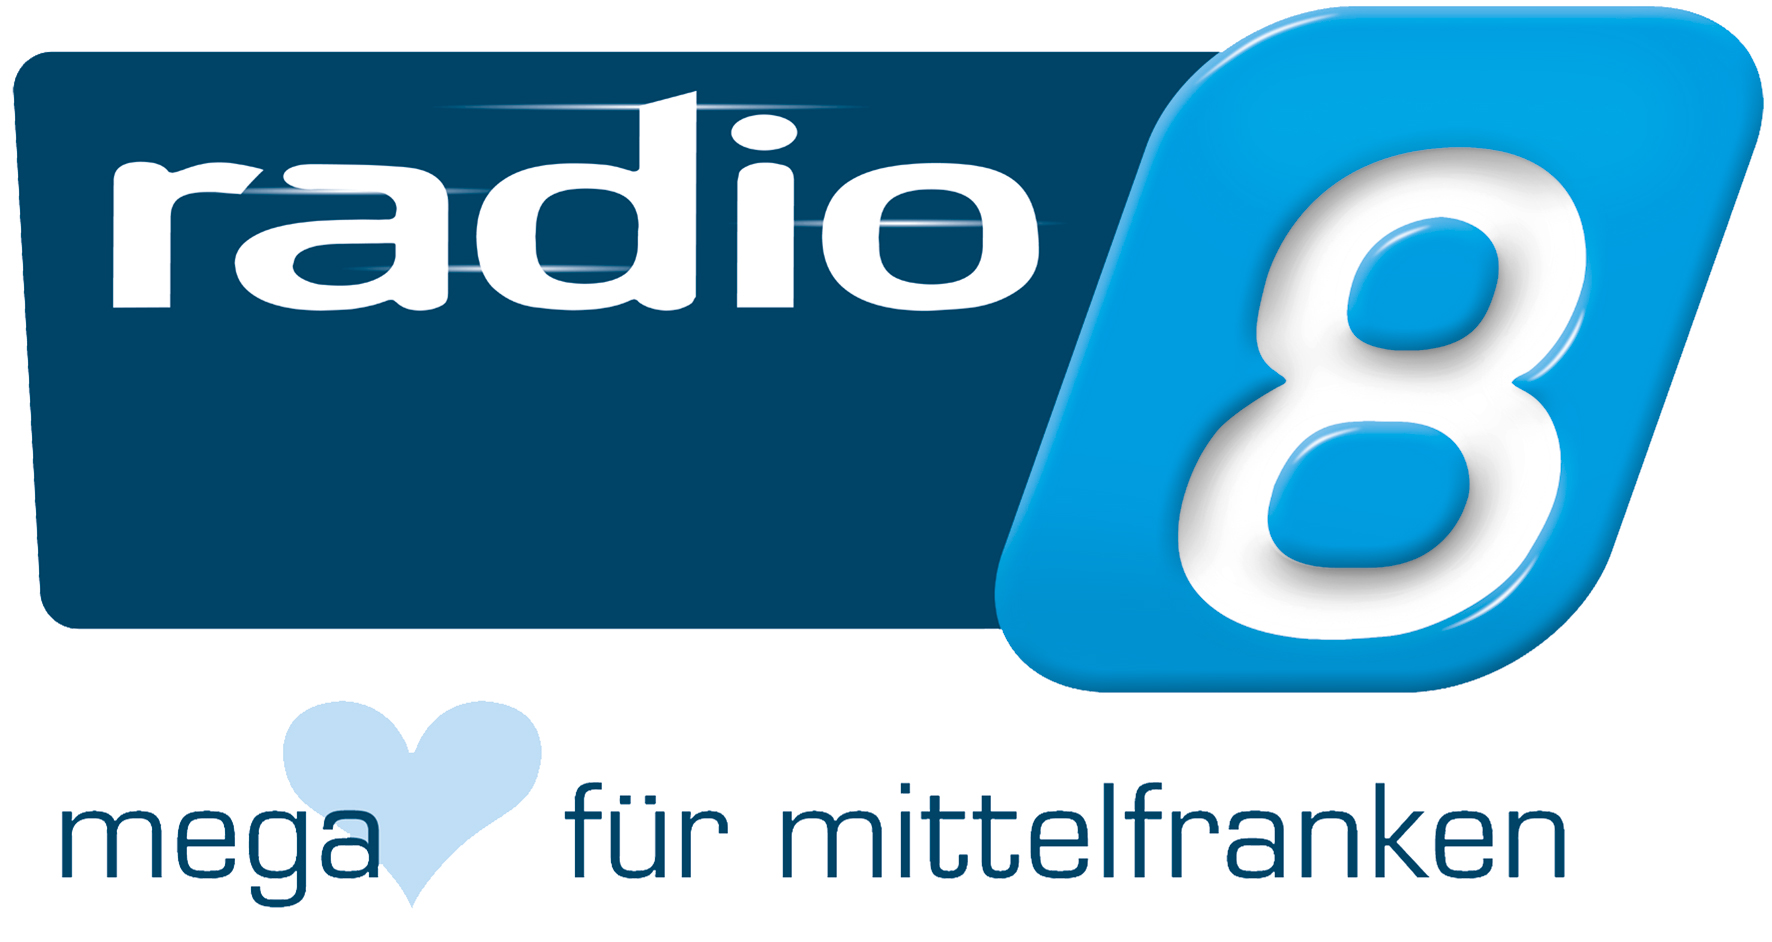 Logo Radio 8